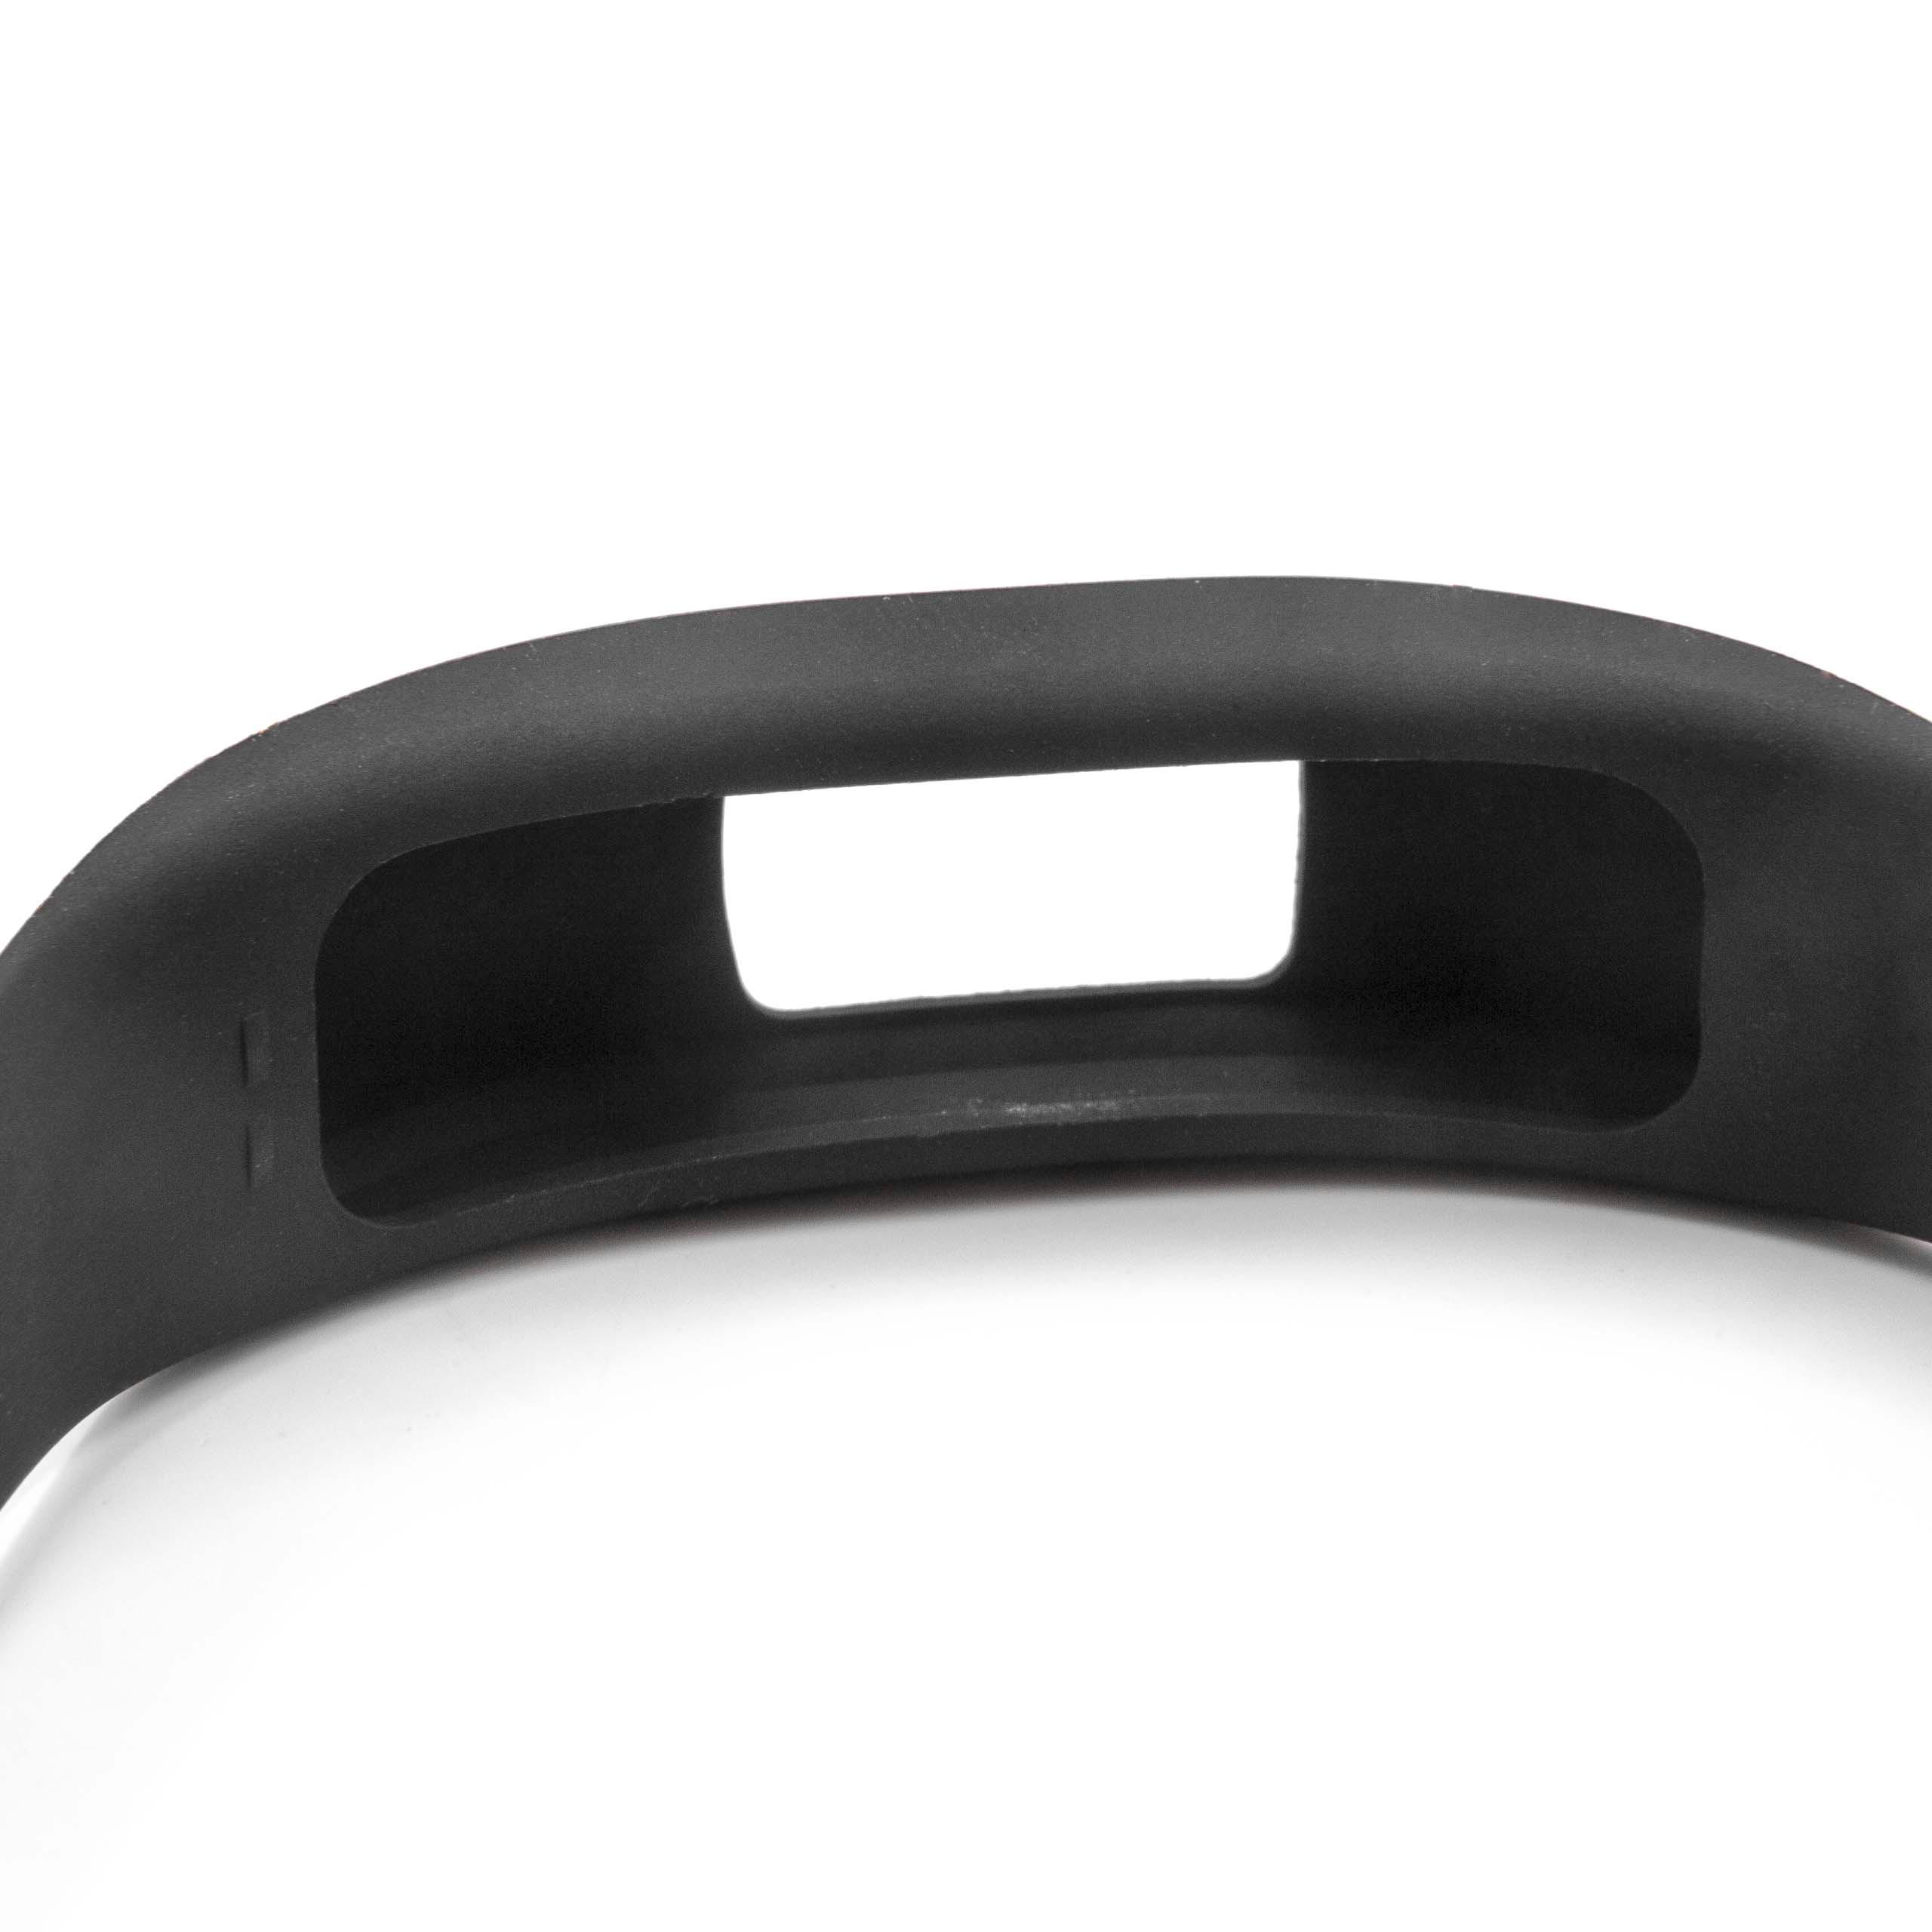 wristband for Garmin Vivofit Smartwatch - 23 cm long, 18mm wide, silicone, black